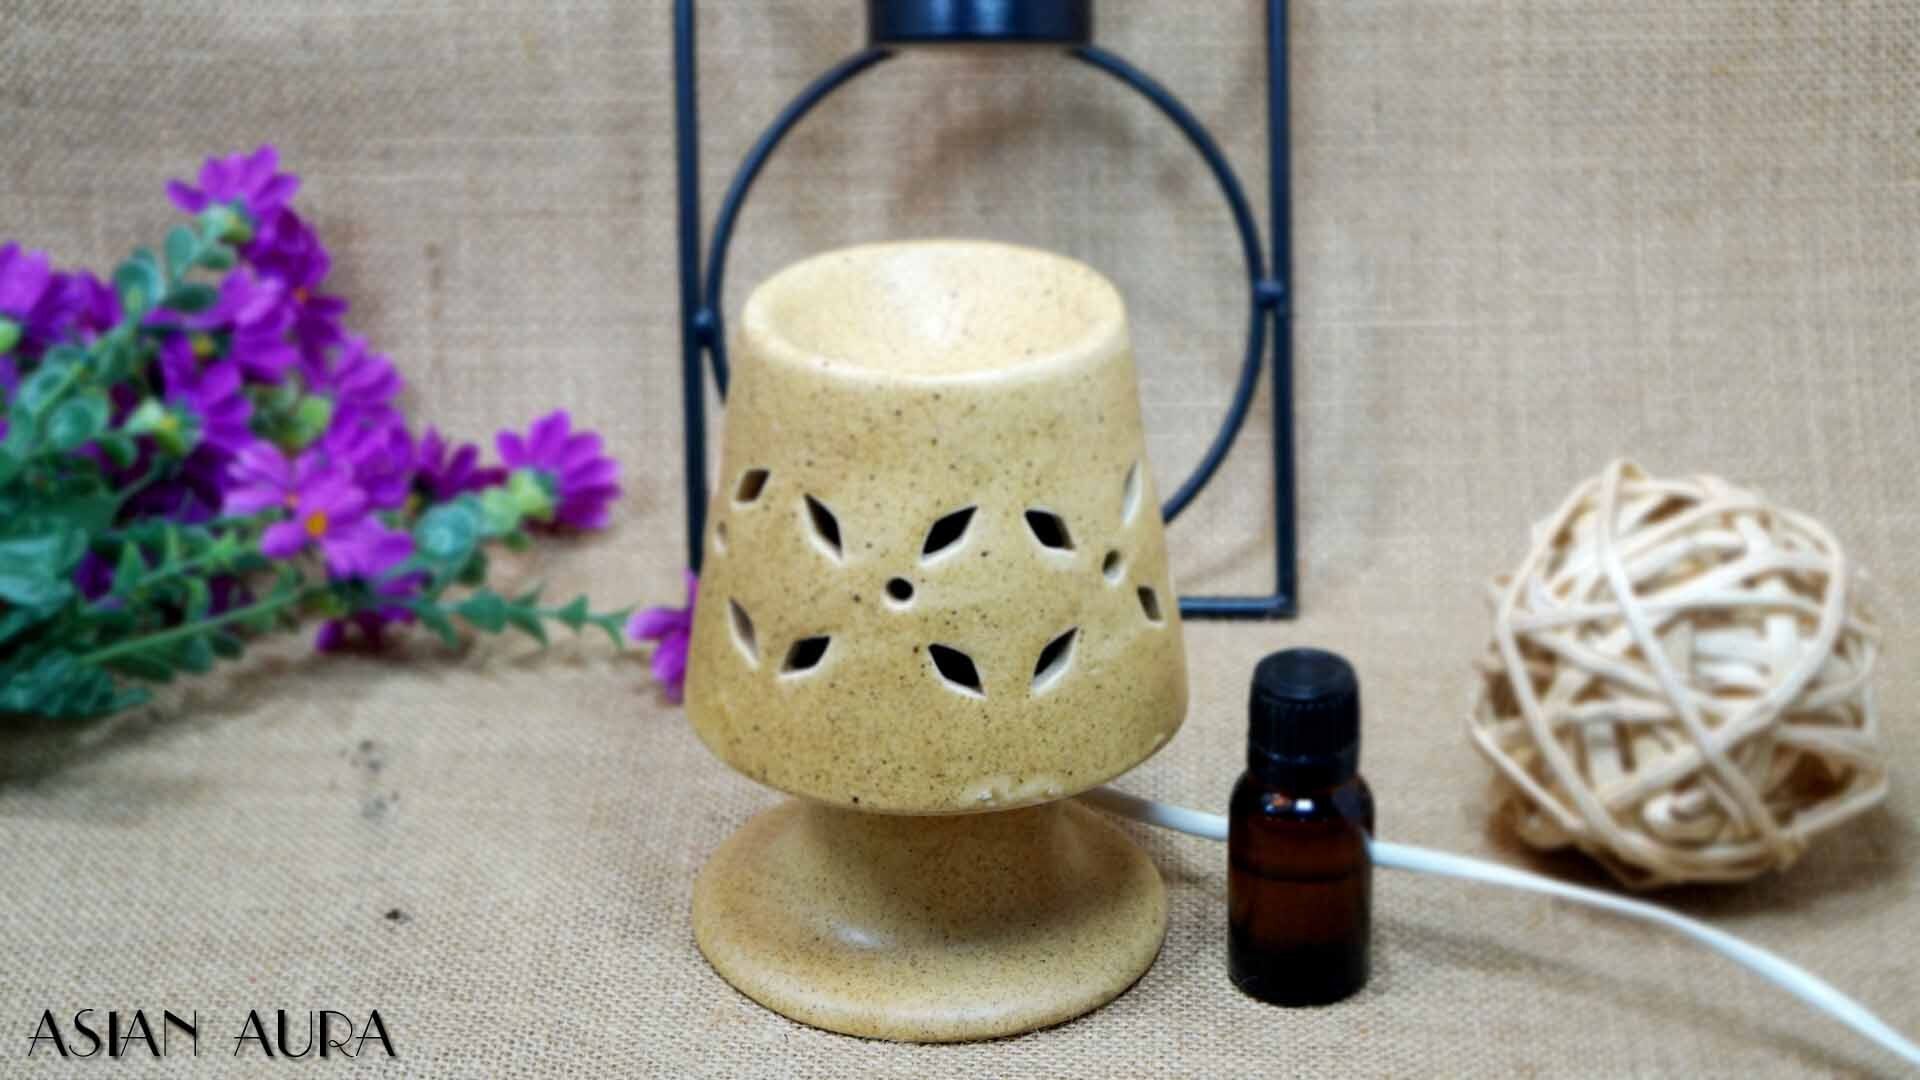 Asian Aura Ceramic Aromatic Oil Diffuser with 2 oil bottles AAEB 005-B